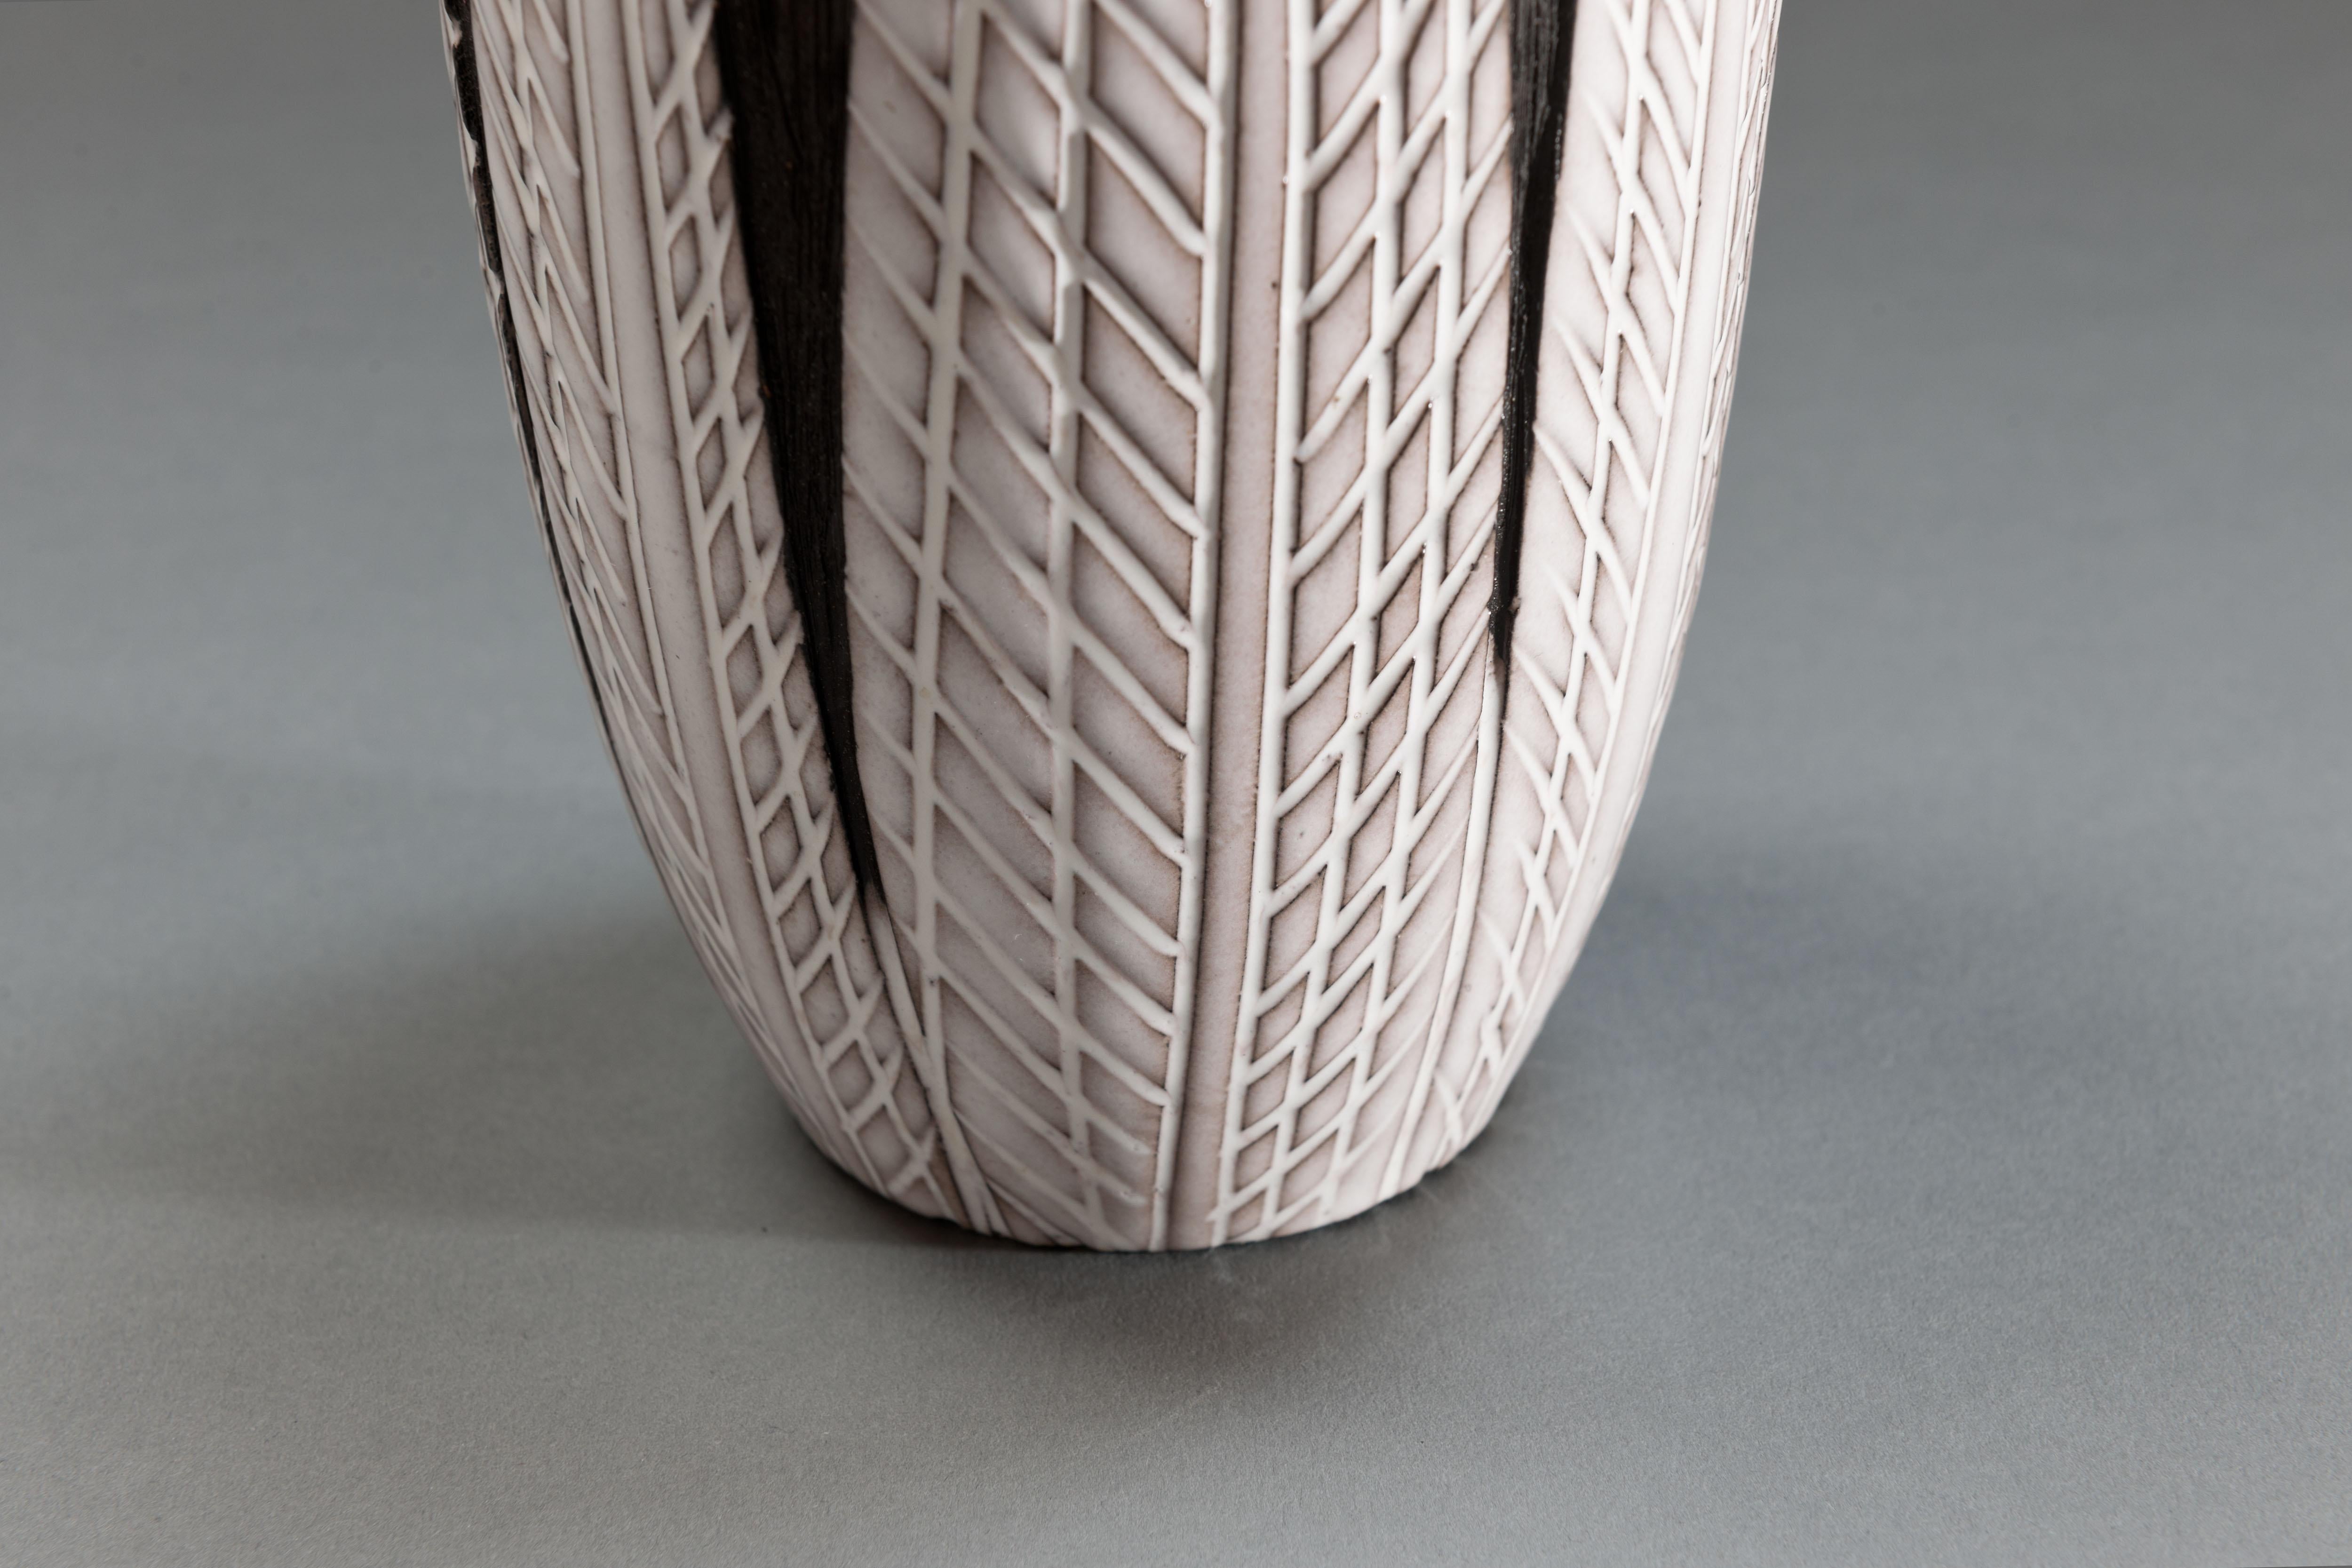 Anna-Lisa Thomson Ceramic 'Paprika' Vases (3) by Upsala Ekeby For Sale 6